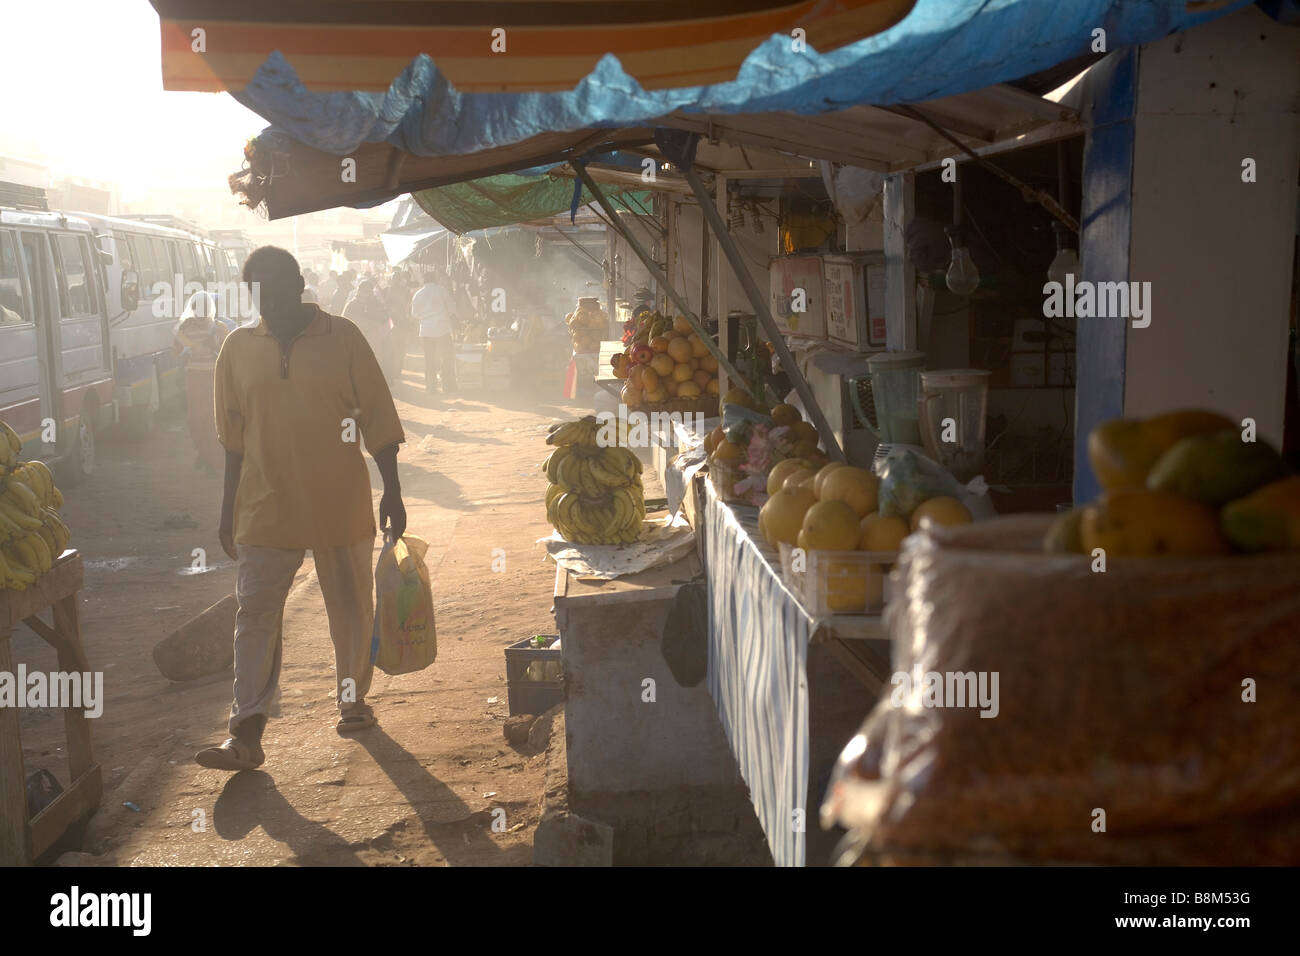 A customer walks by the shop at Ommdurman market, West Khartoum Stock Photo